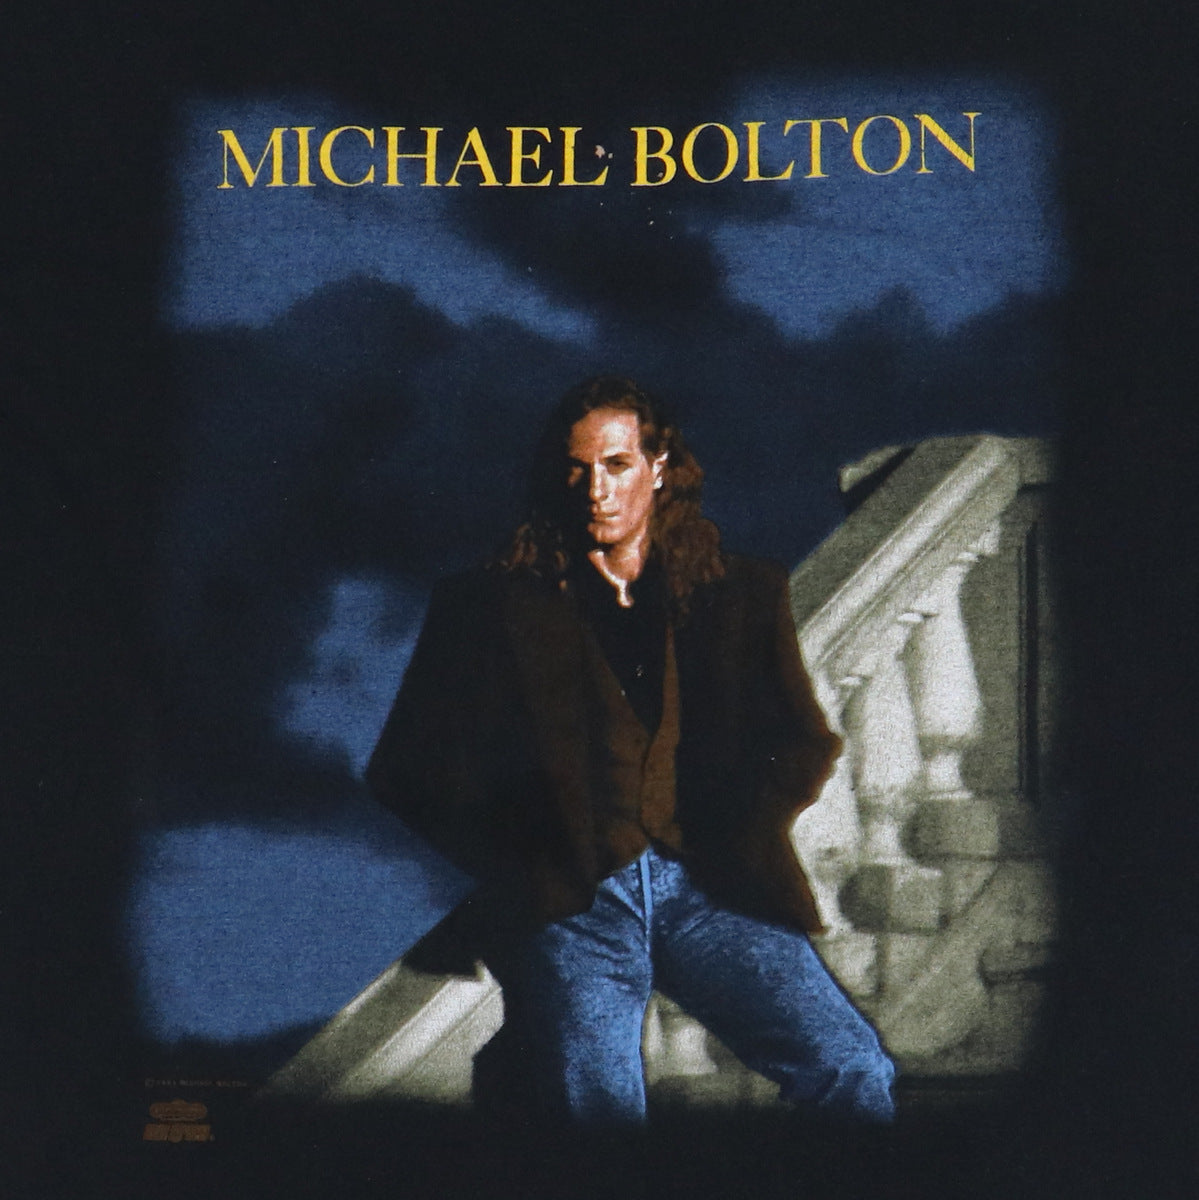 1991 Michael Bolton Time Love & Tenderness World Tour Shirt